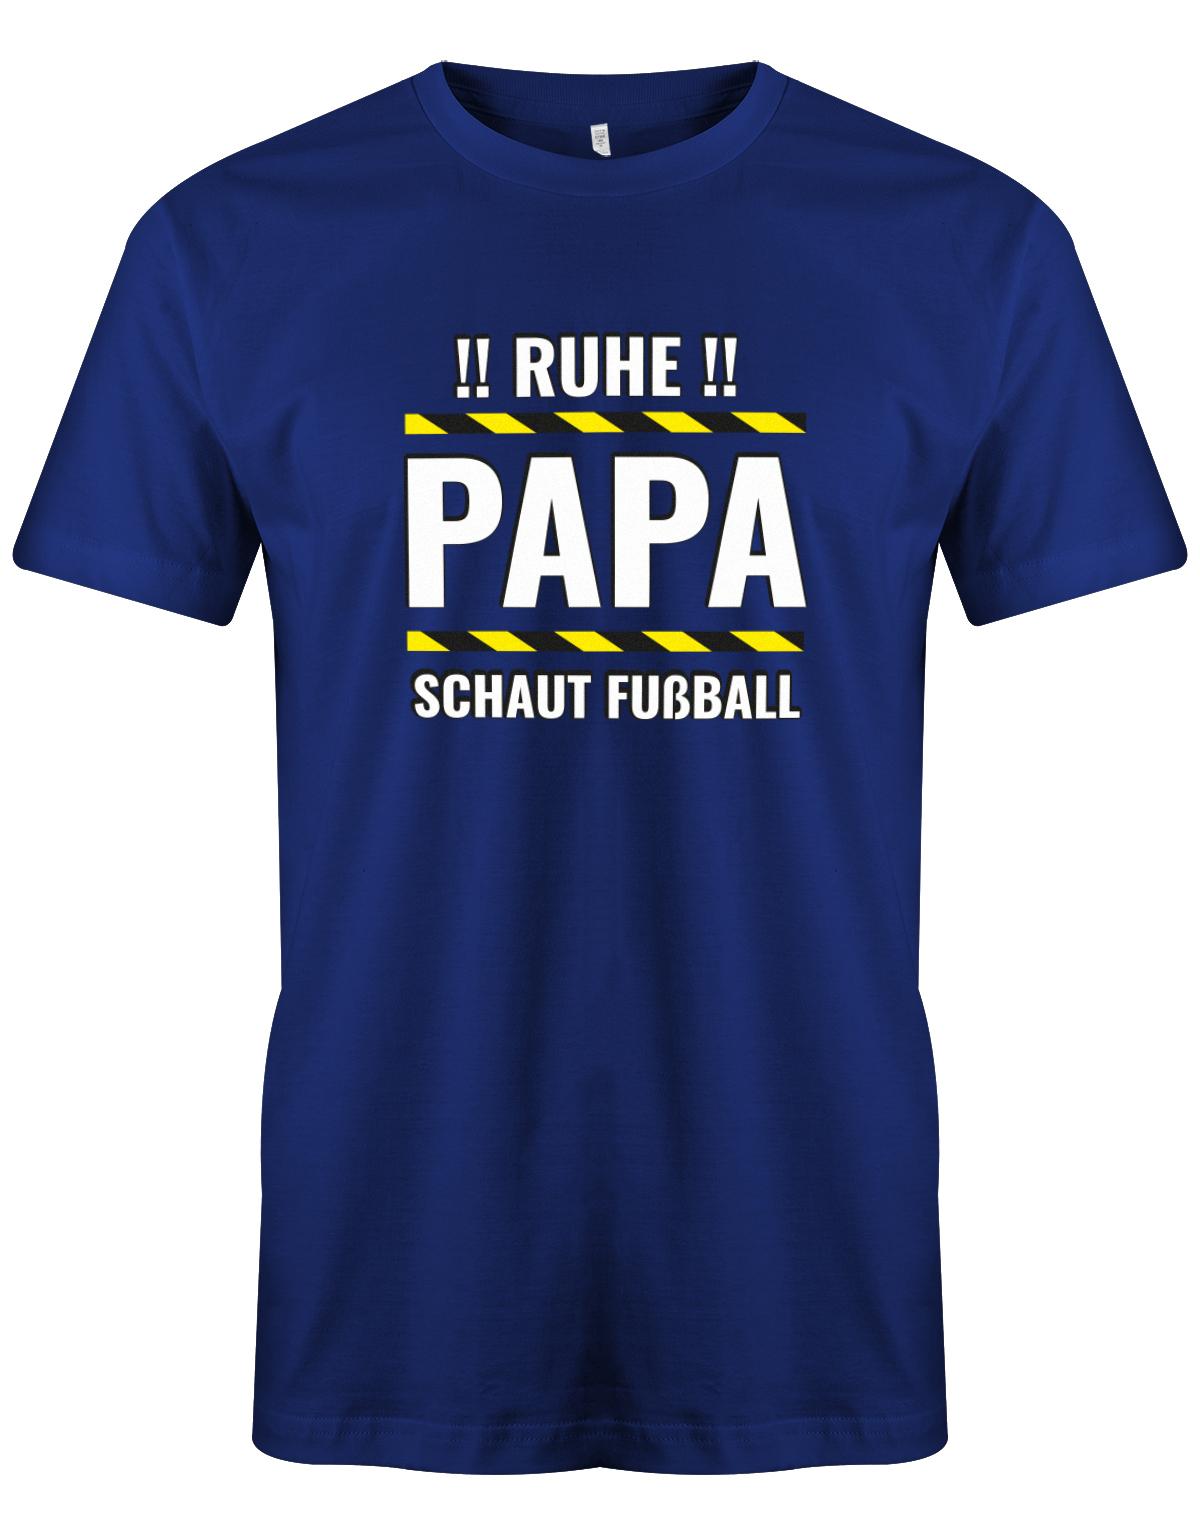 Ruhe-Papa-schaut-Fussball-Herren-Shirt-Royalblau